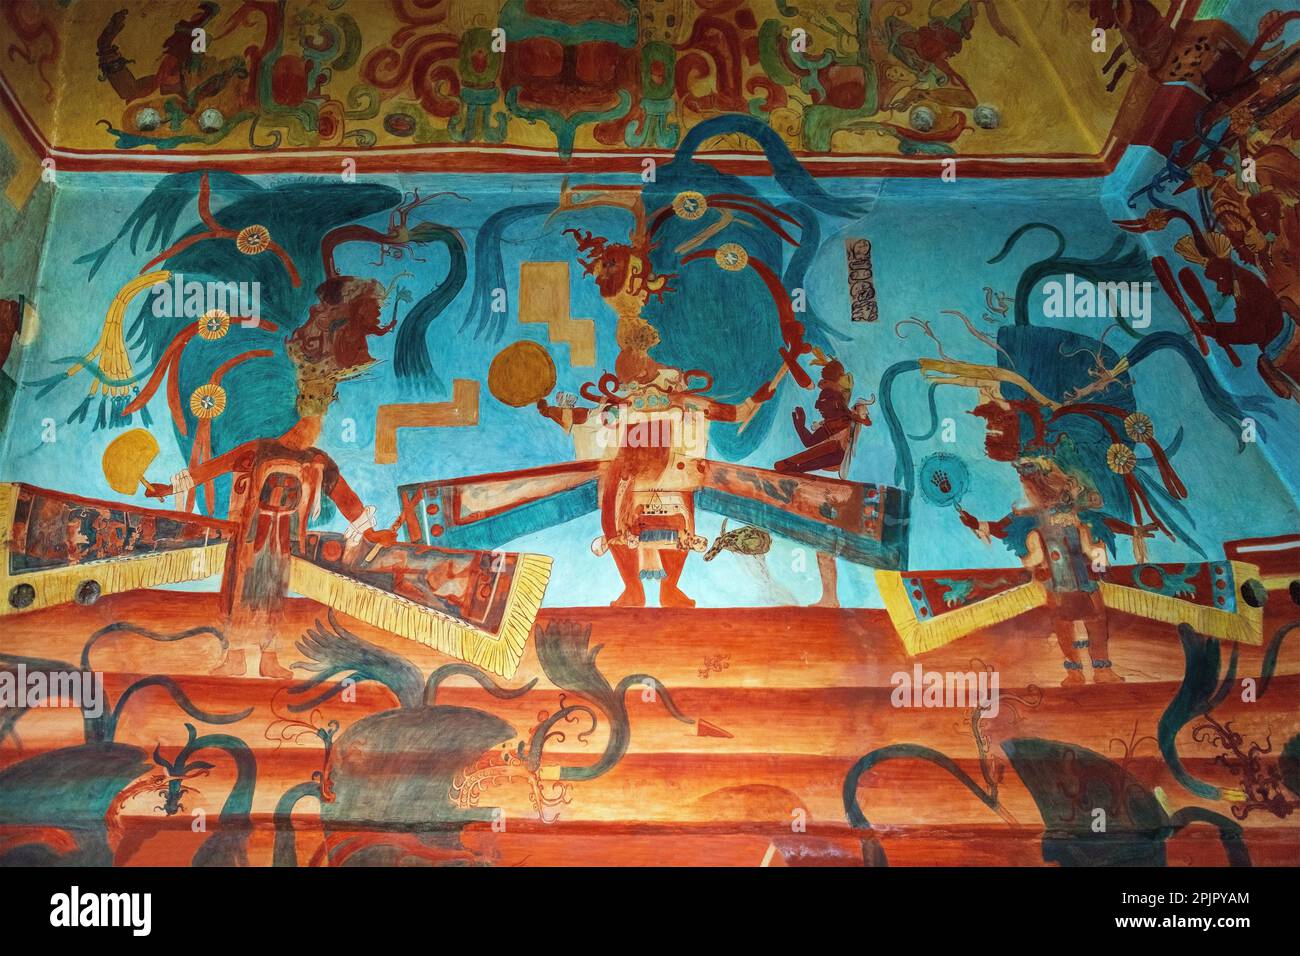 Maya-Fresko-Gemälde in Zimmer 3 des Wandtempels in der Stadt Bonampak, Chiapas, Mexiko. Stockfoto